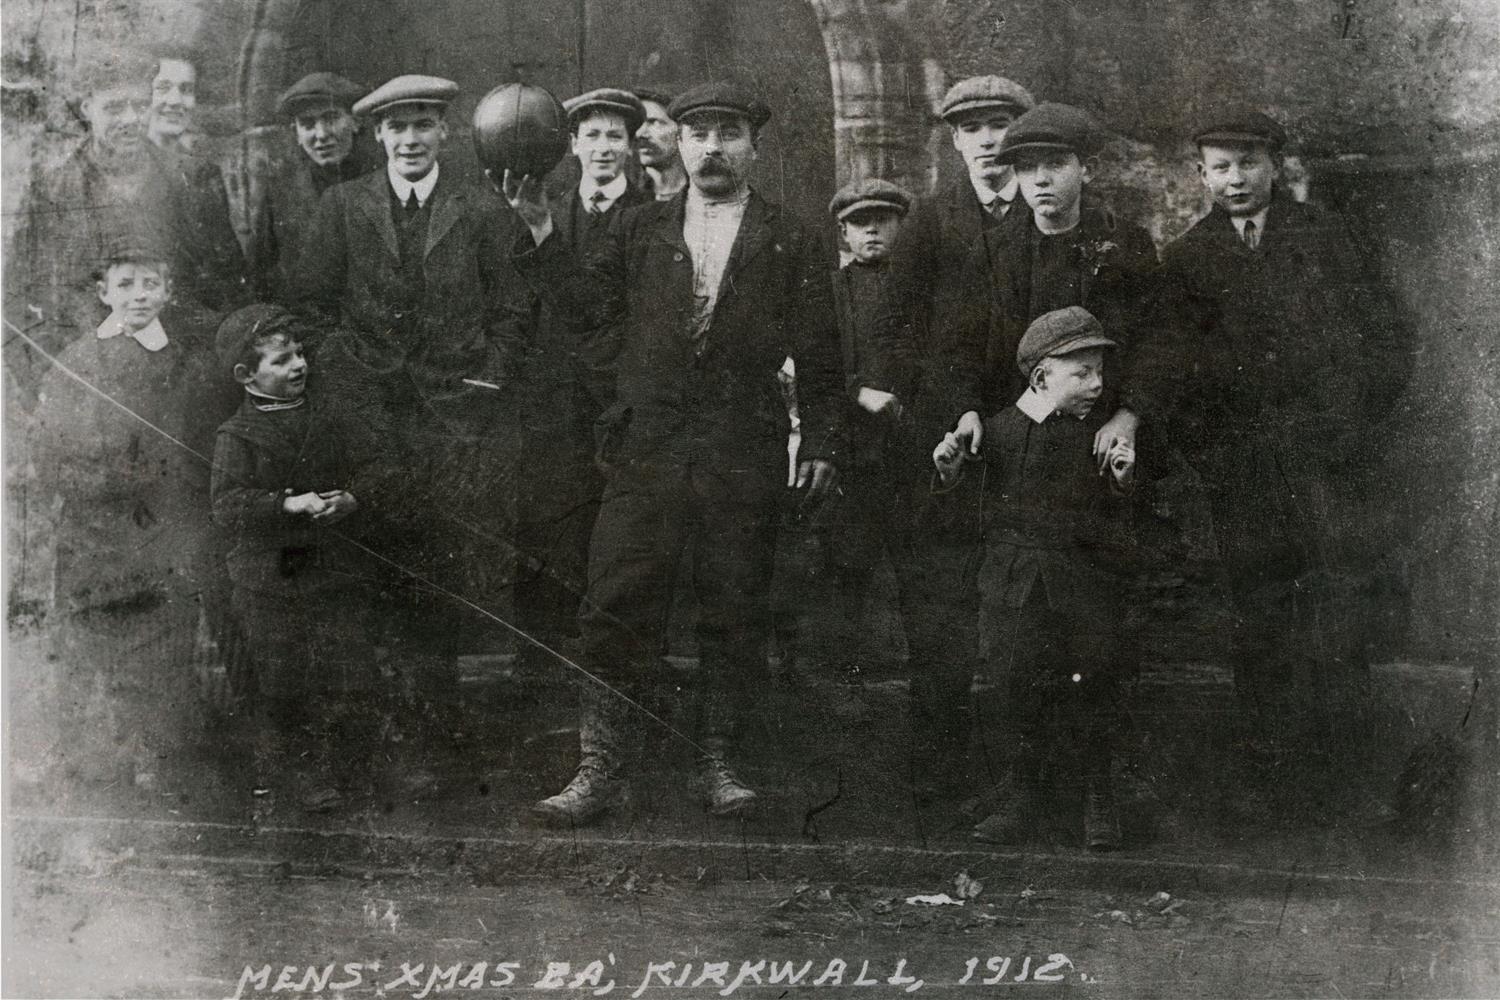 B&W photo of Kirkwall's football team, 1912 